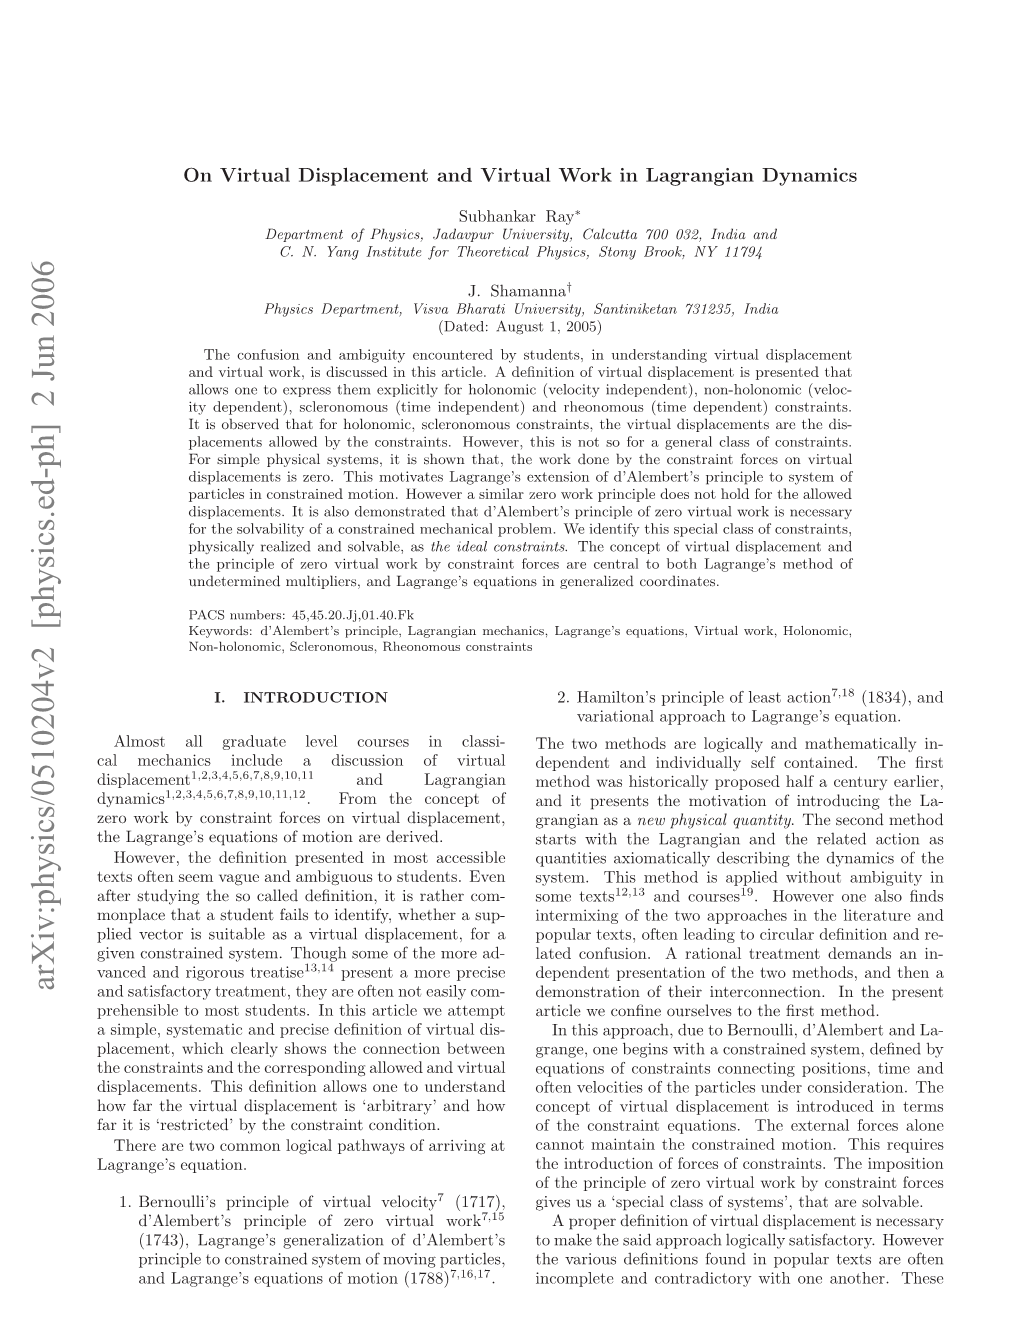 Physics/0510204V2 [Physics.Ed-Ph] 2 Jun 2006 a Ehnc Nld Icsino Virtual of Discussion a Include Mechanics Displacement Cal Dynamics Arnesequation